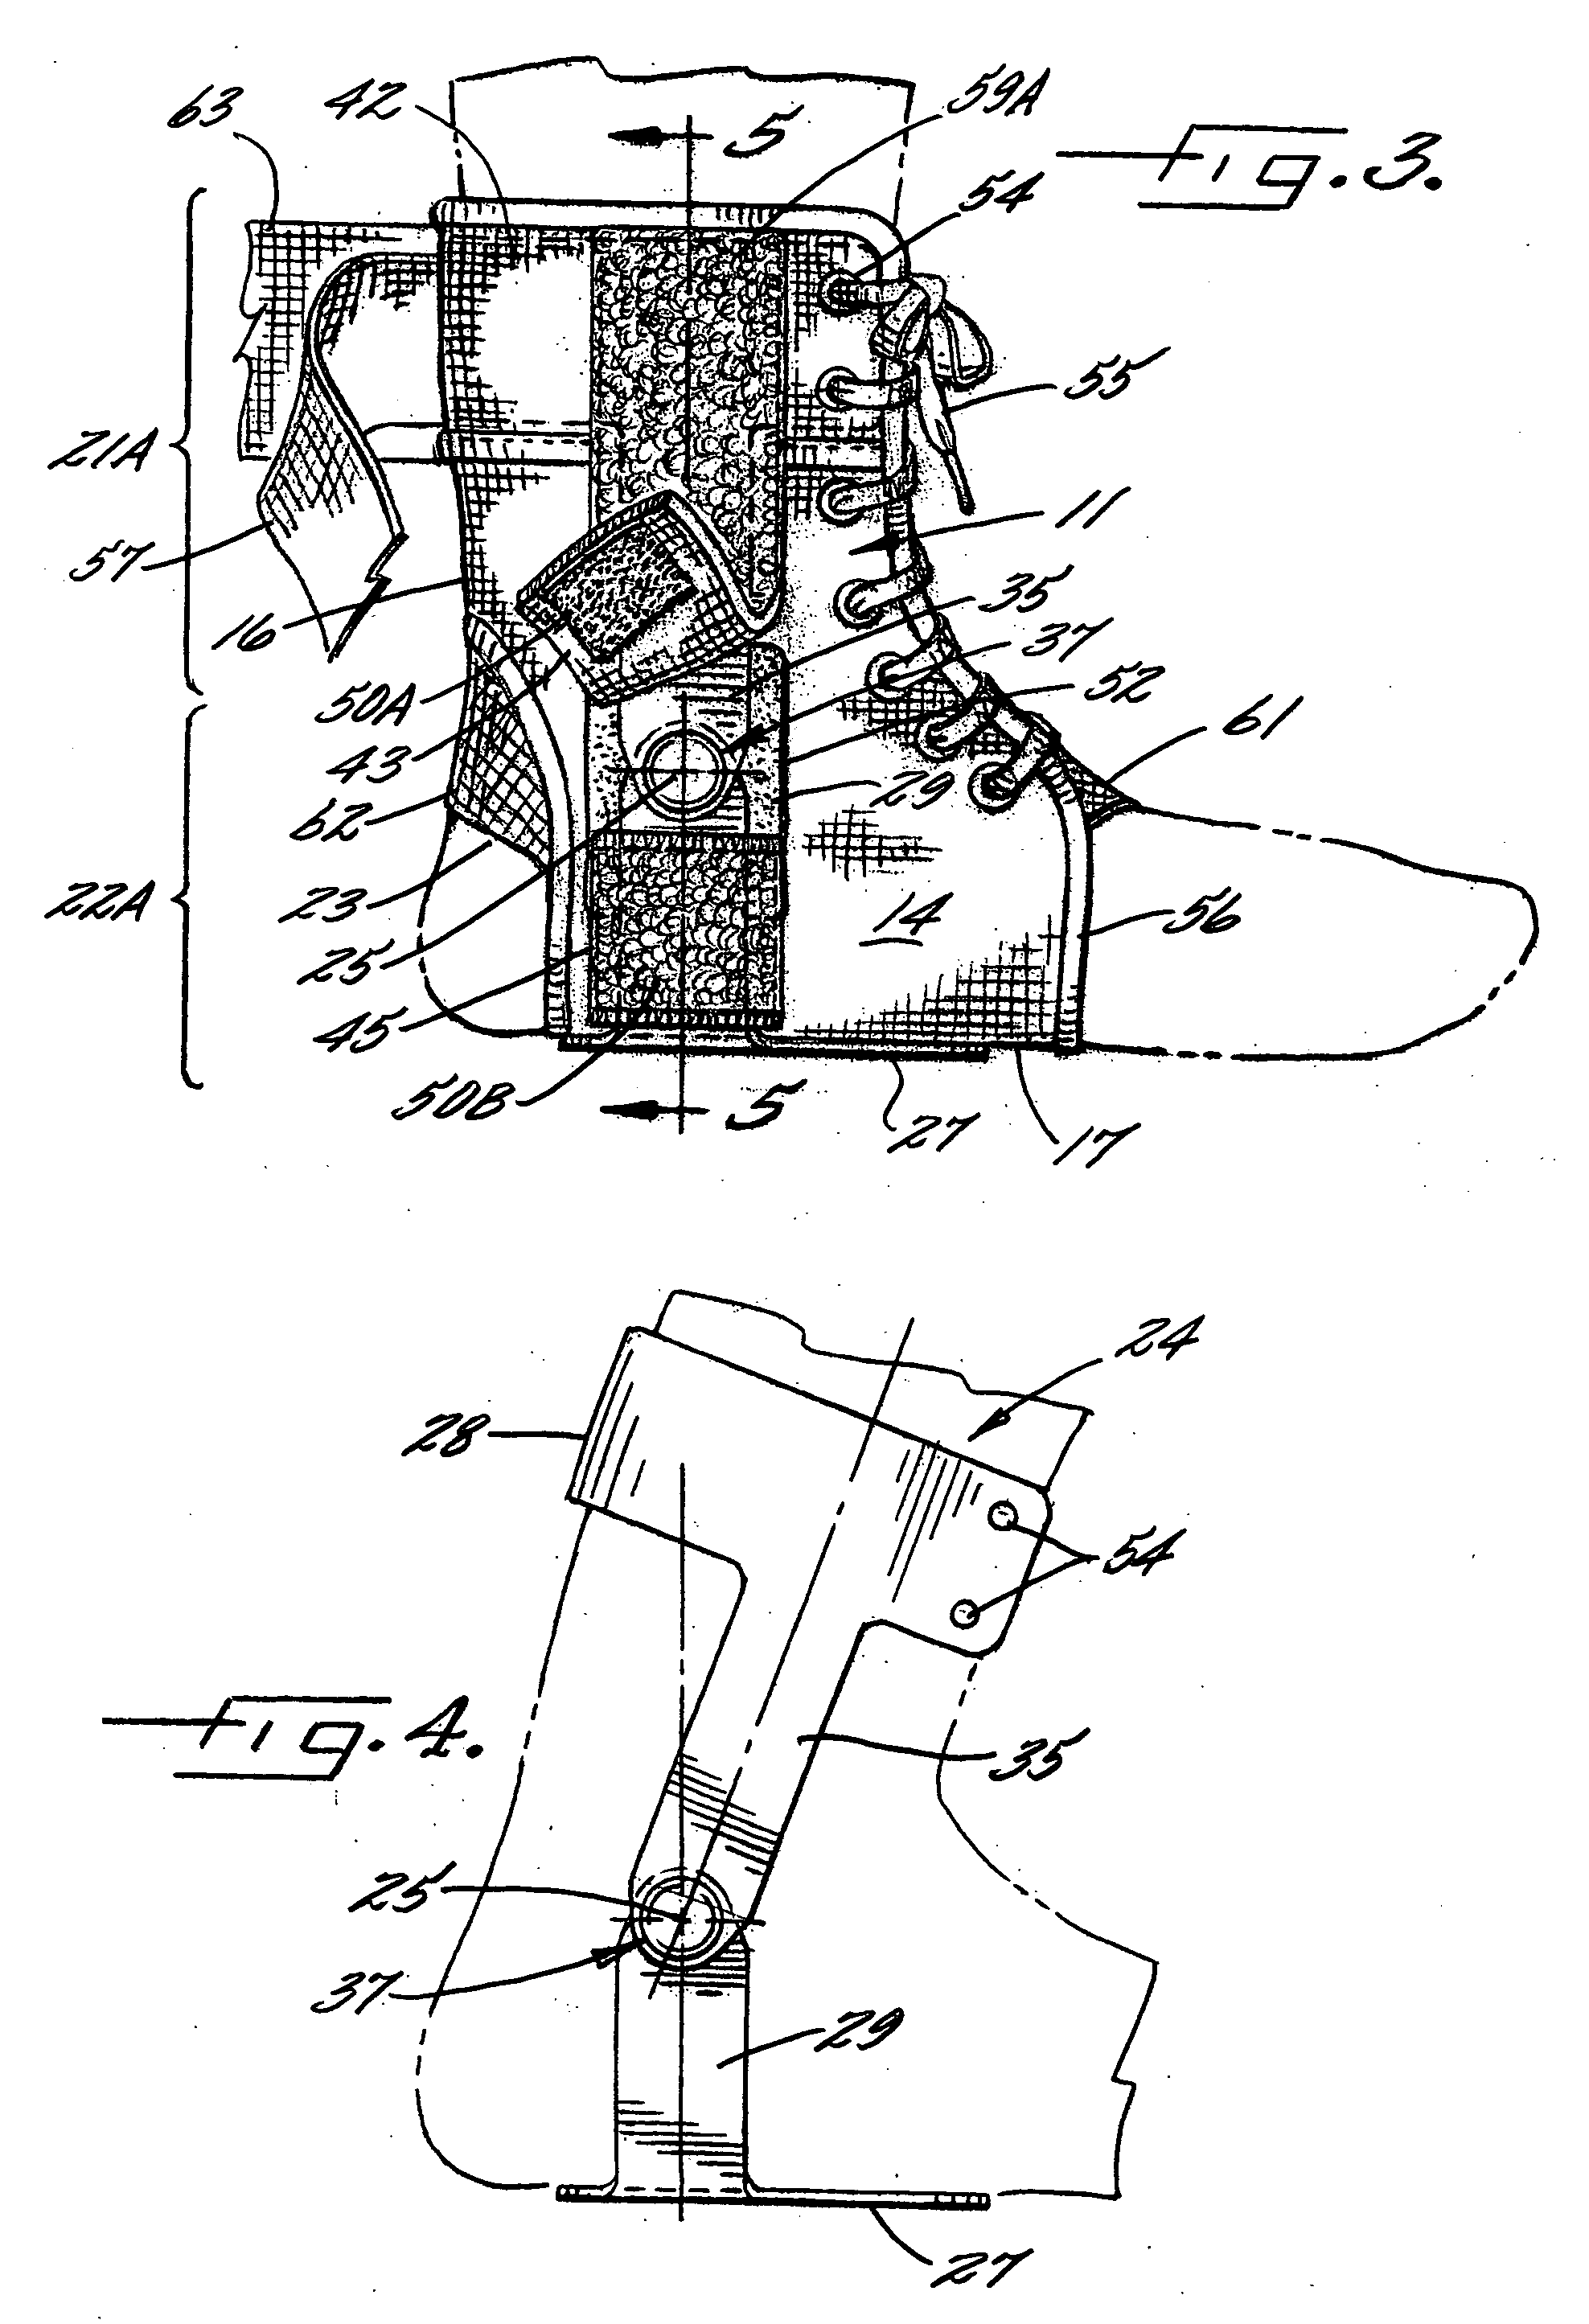 Ankle stabilizing apparatus having a pivotable stiffening unit